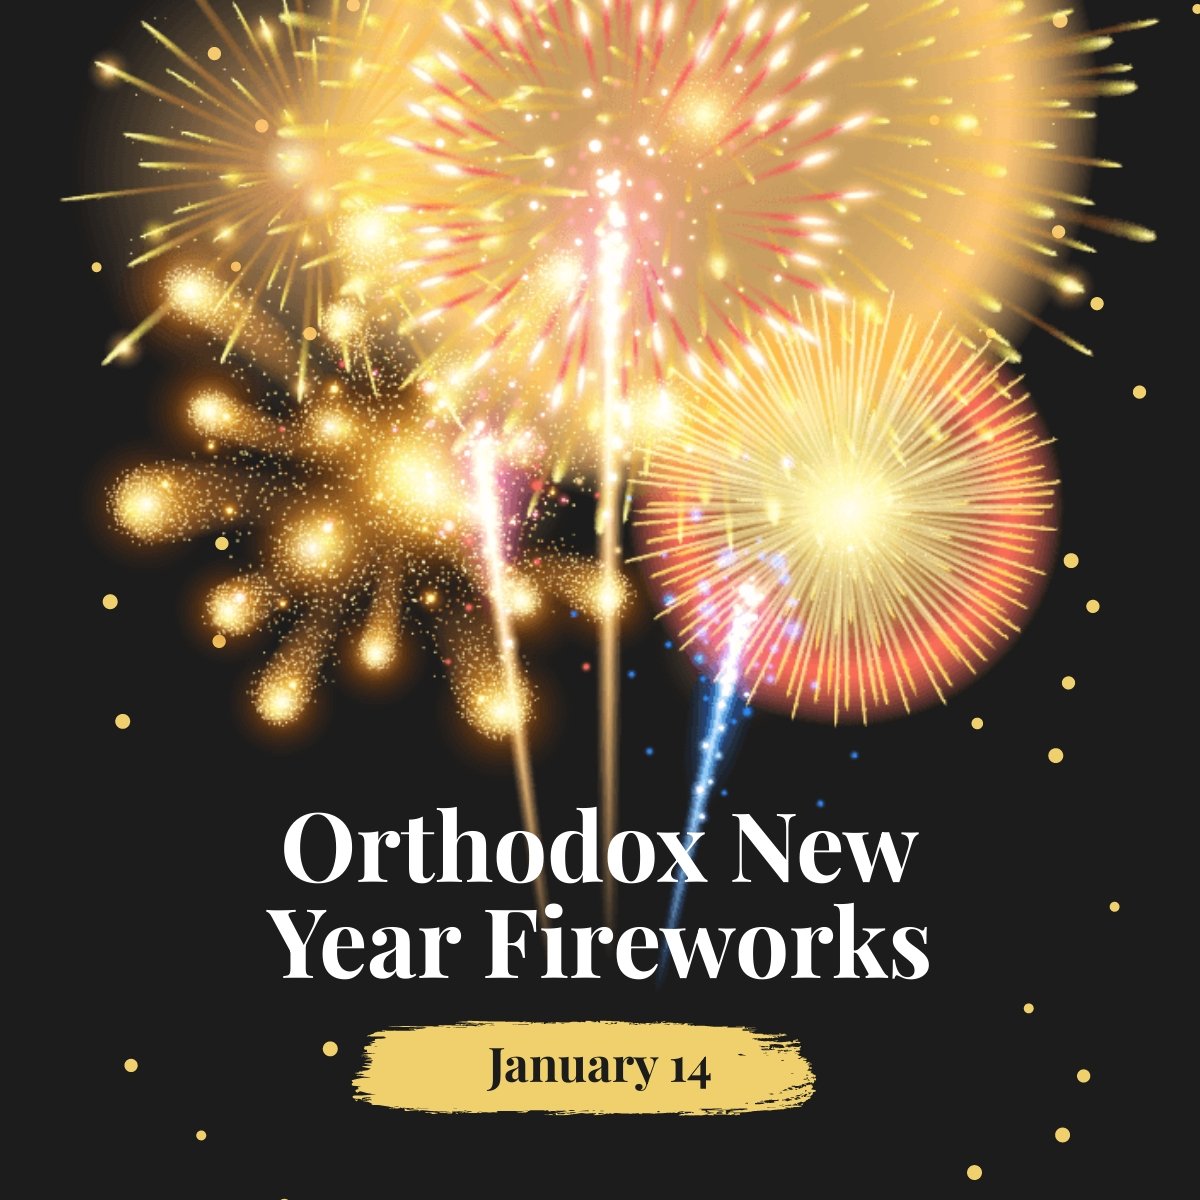 Orthodox New Year Fireworks Linkedin Post